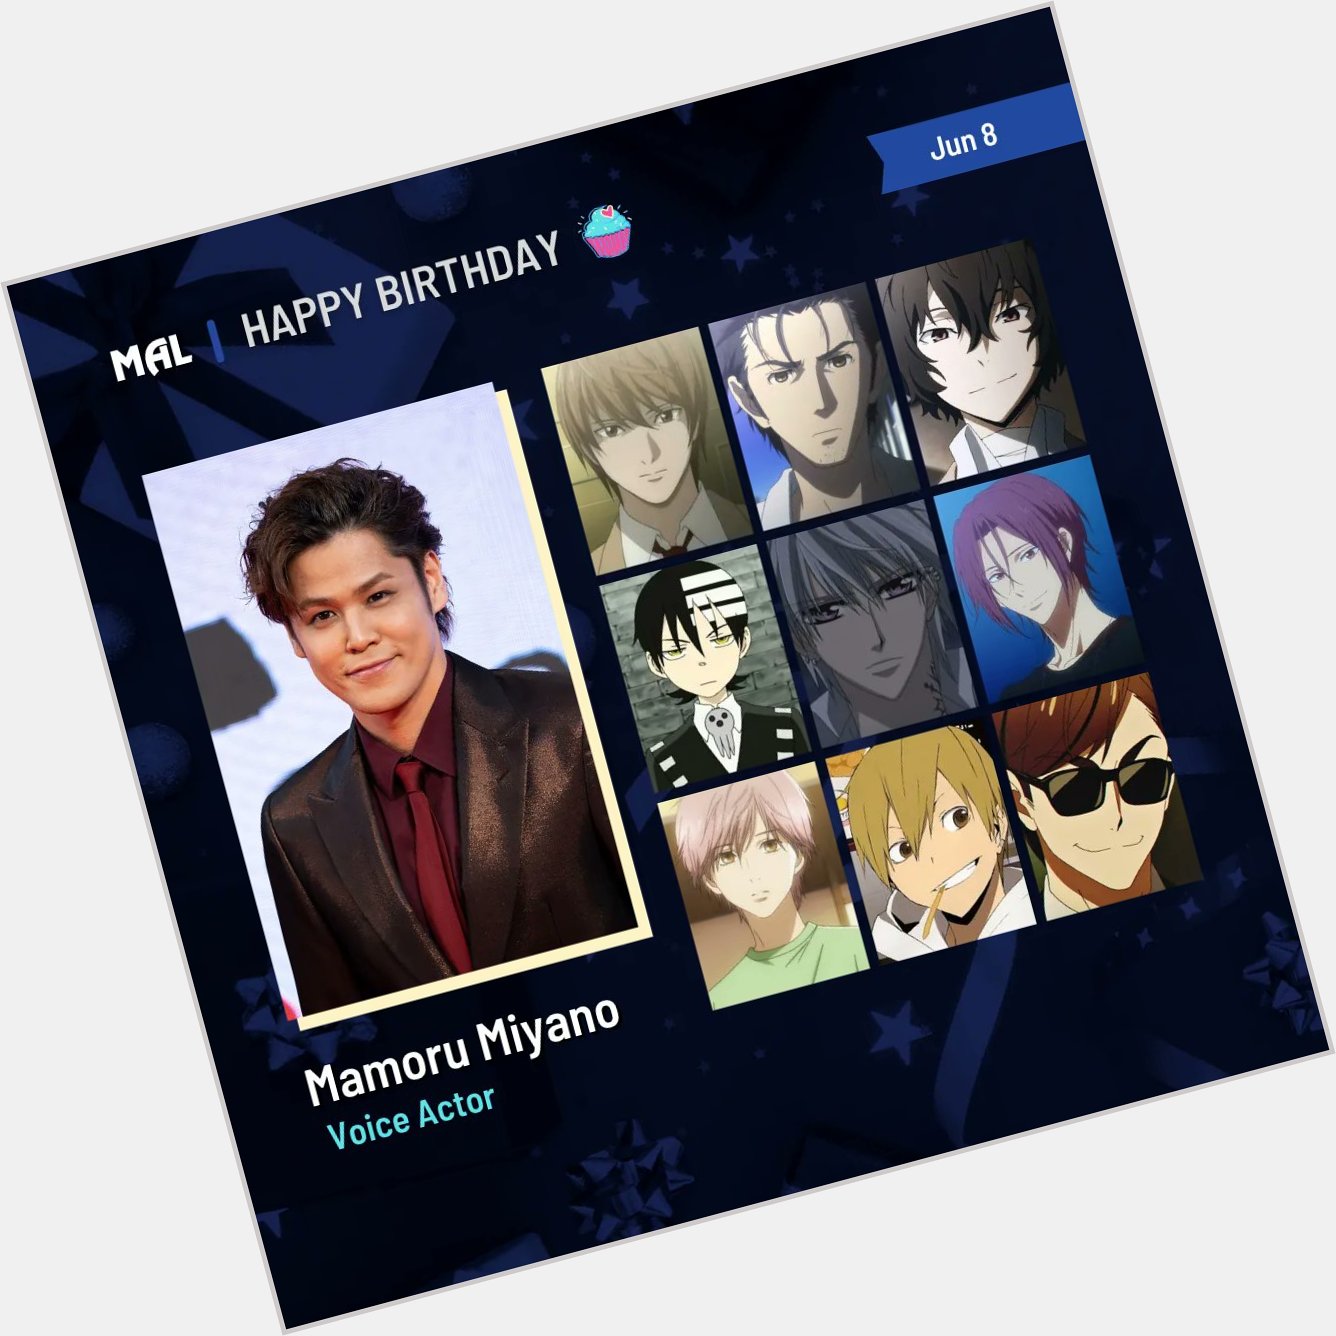 Happy Birthday to Mamoru Miyano! Full profile:  